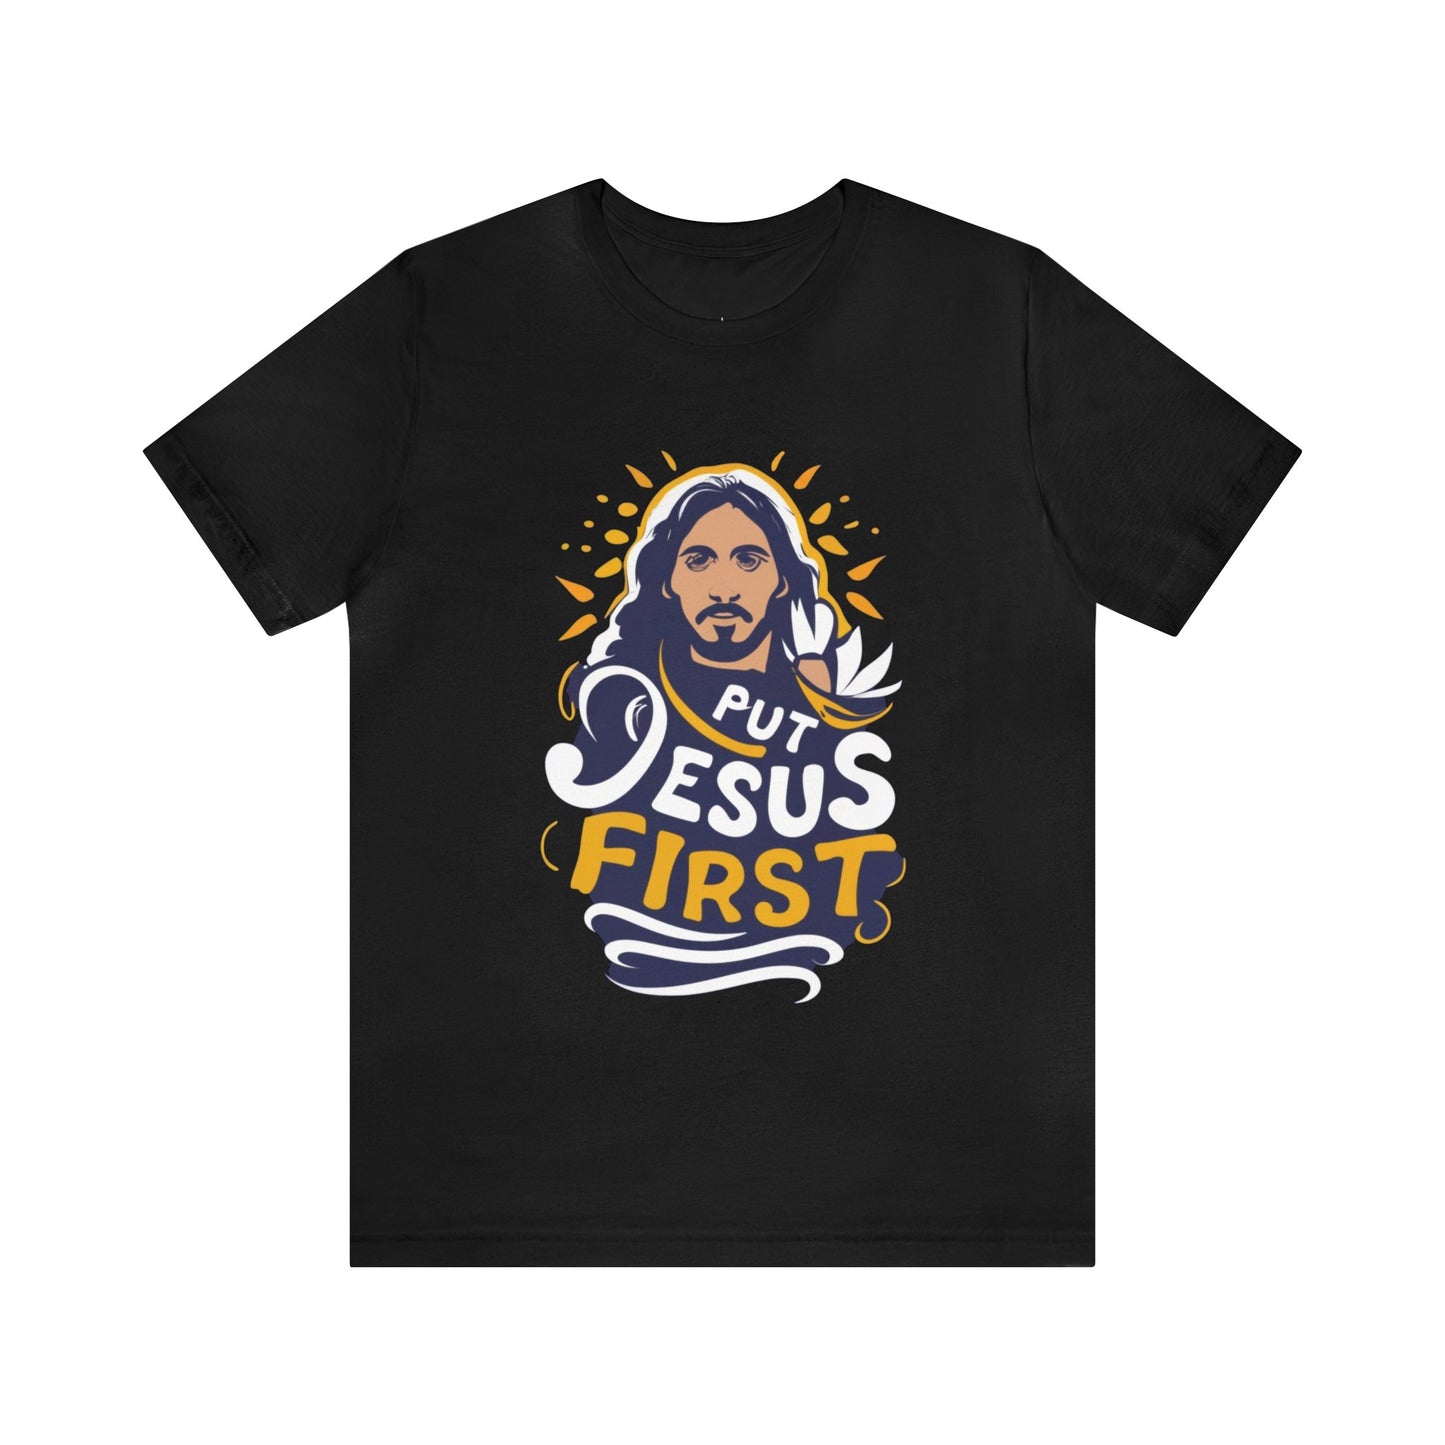 Put Jesus First v3 - Unisex T-shirt